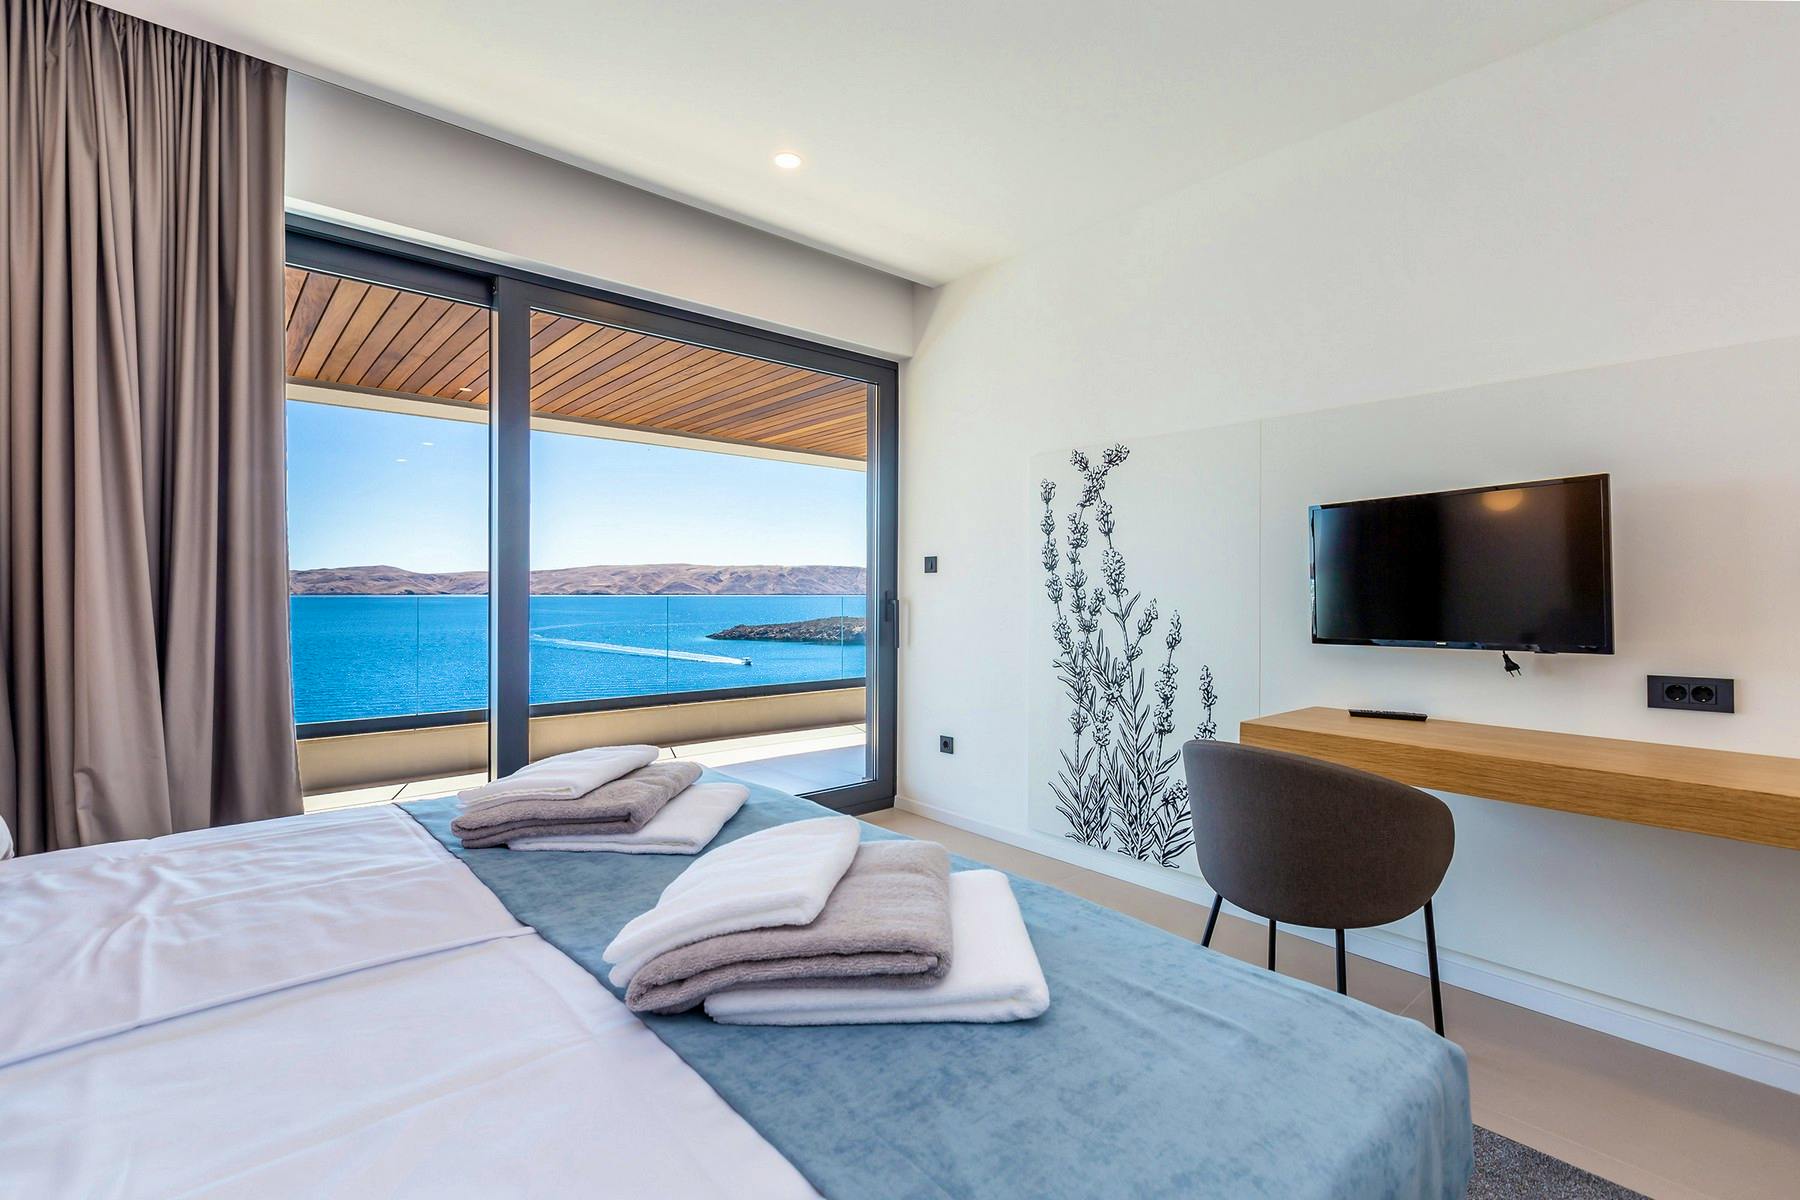 Stylish en-suite bedroom with sea view